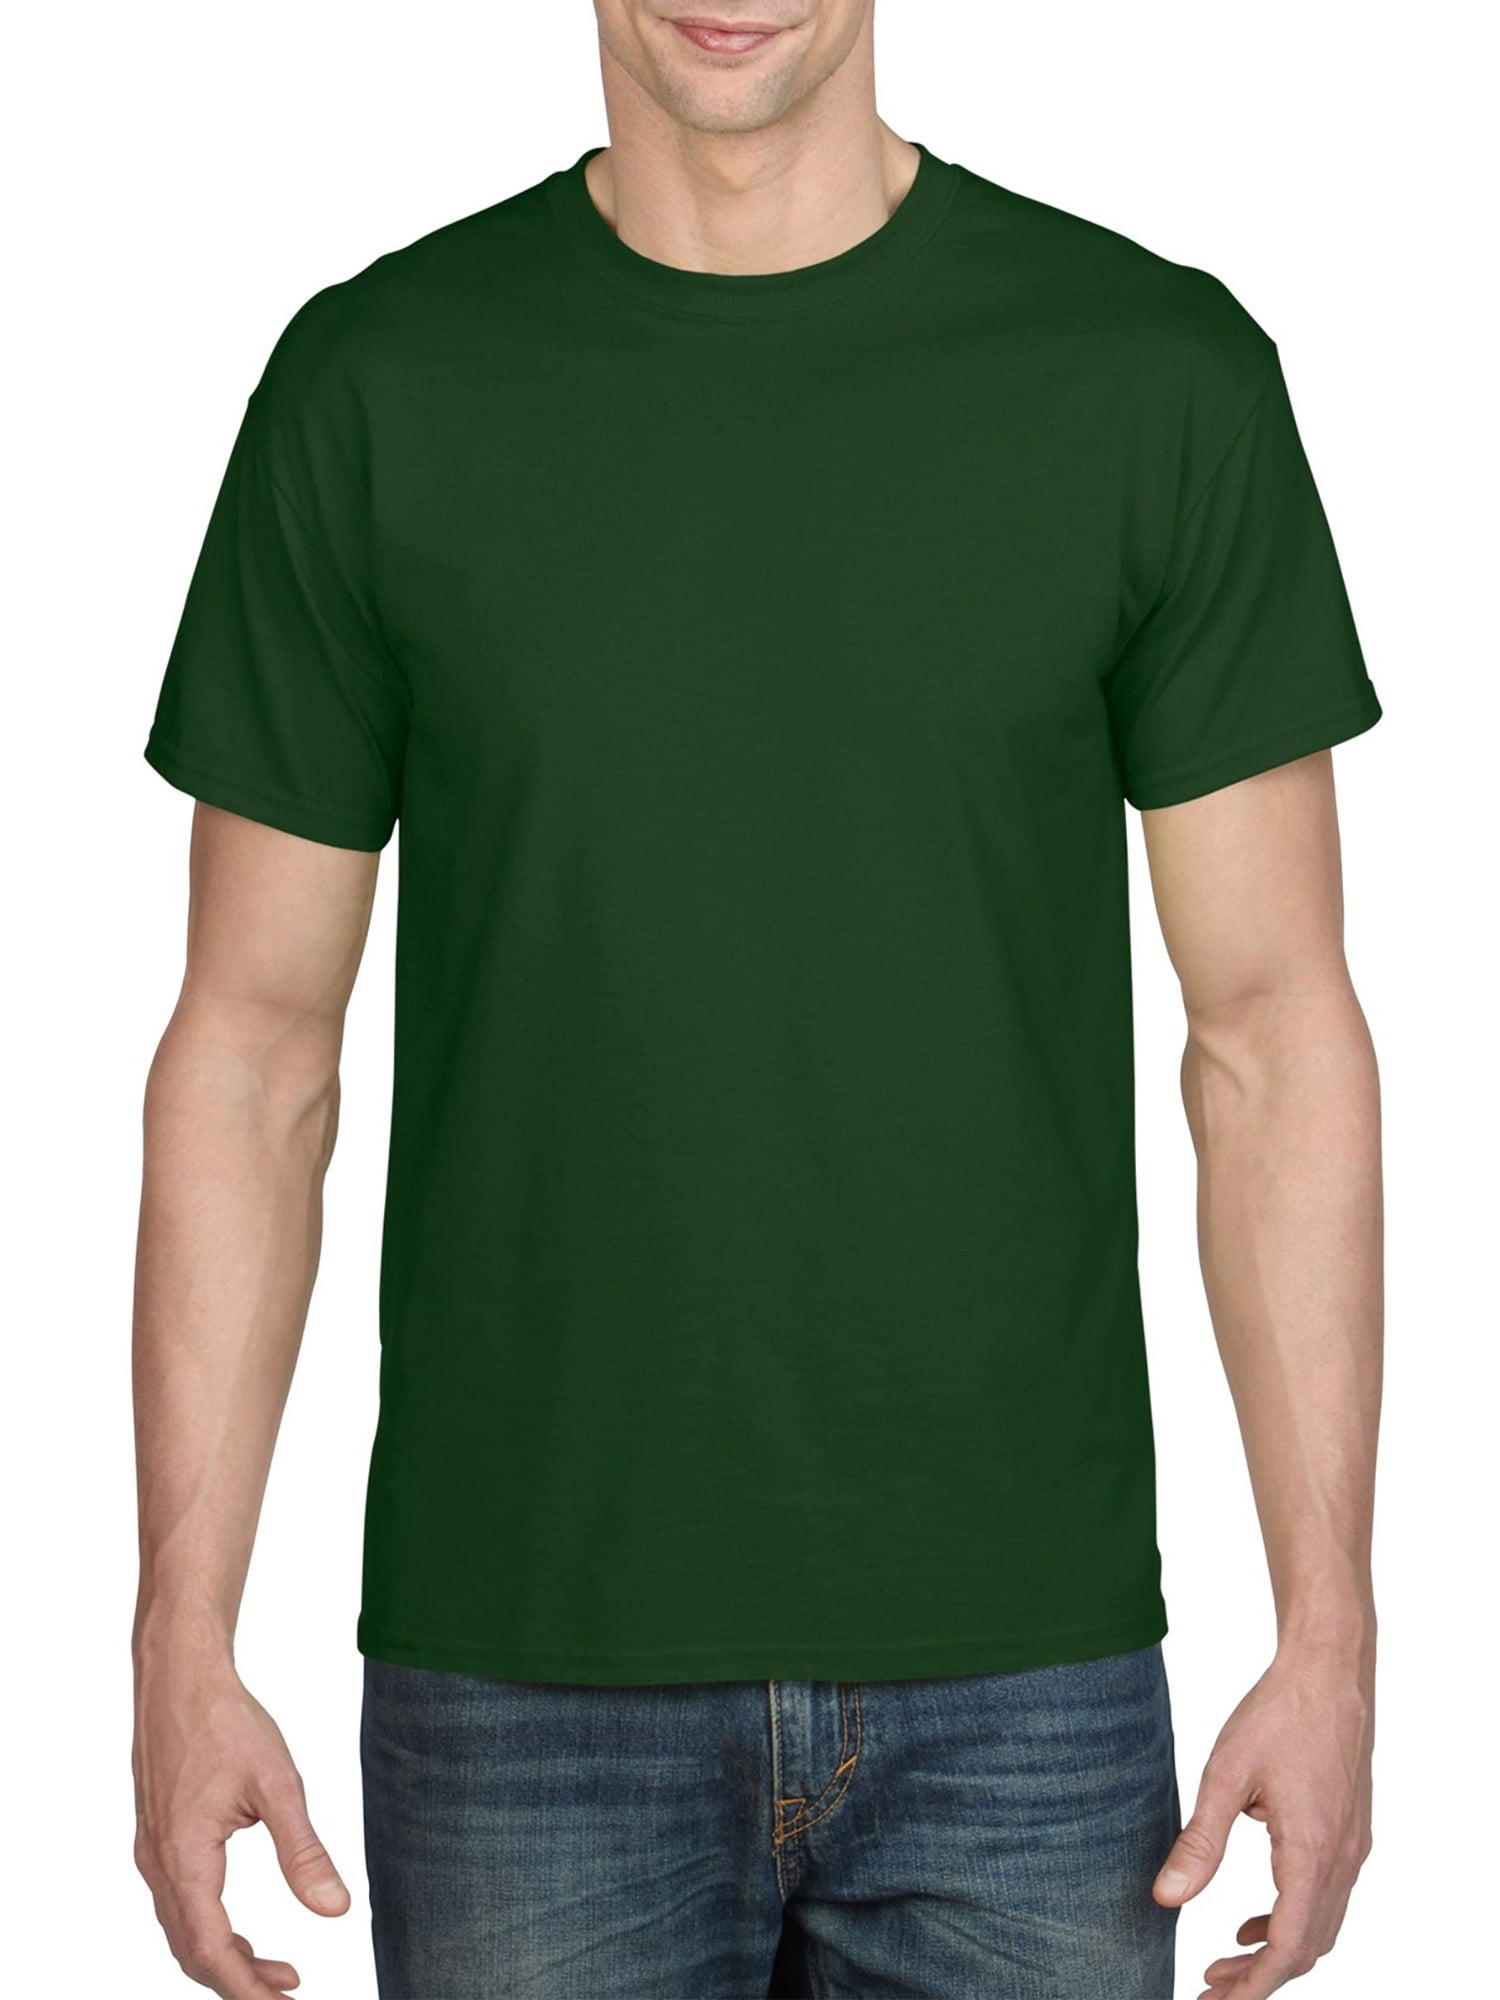 Gildan Men's Dryblend Classic Preshrunk Jersey Knit T-shirt - Walmart.com